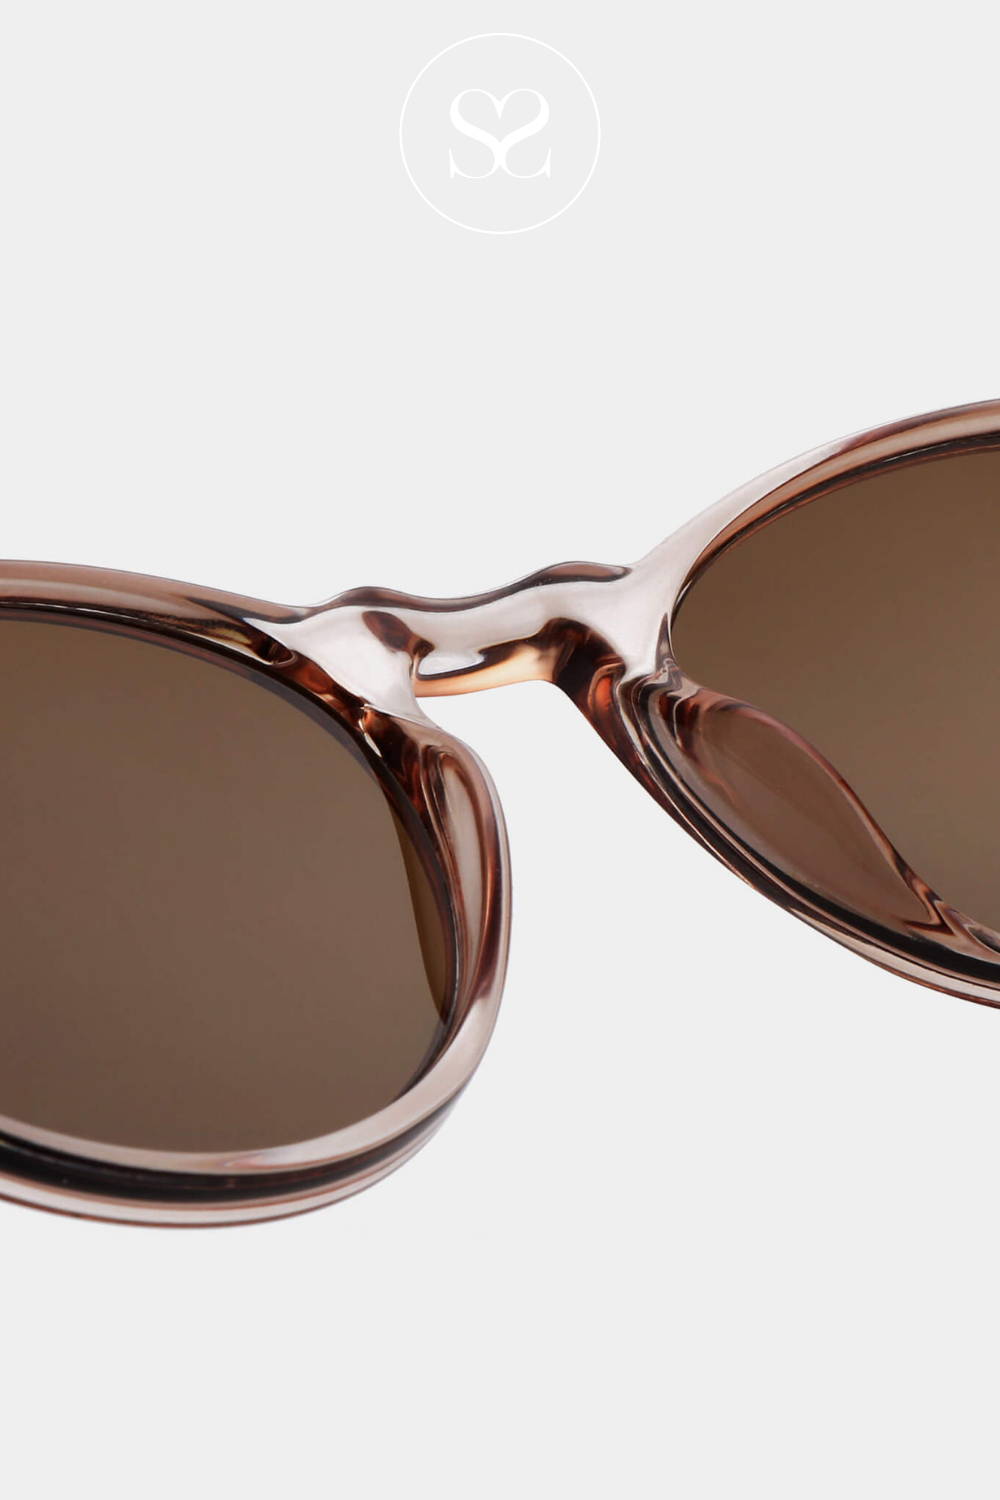 Marvin Champagne sunglasses accessories